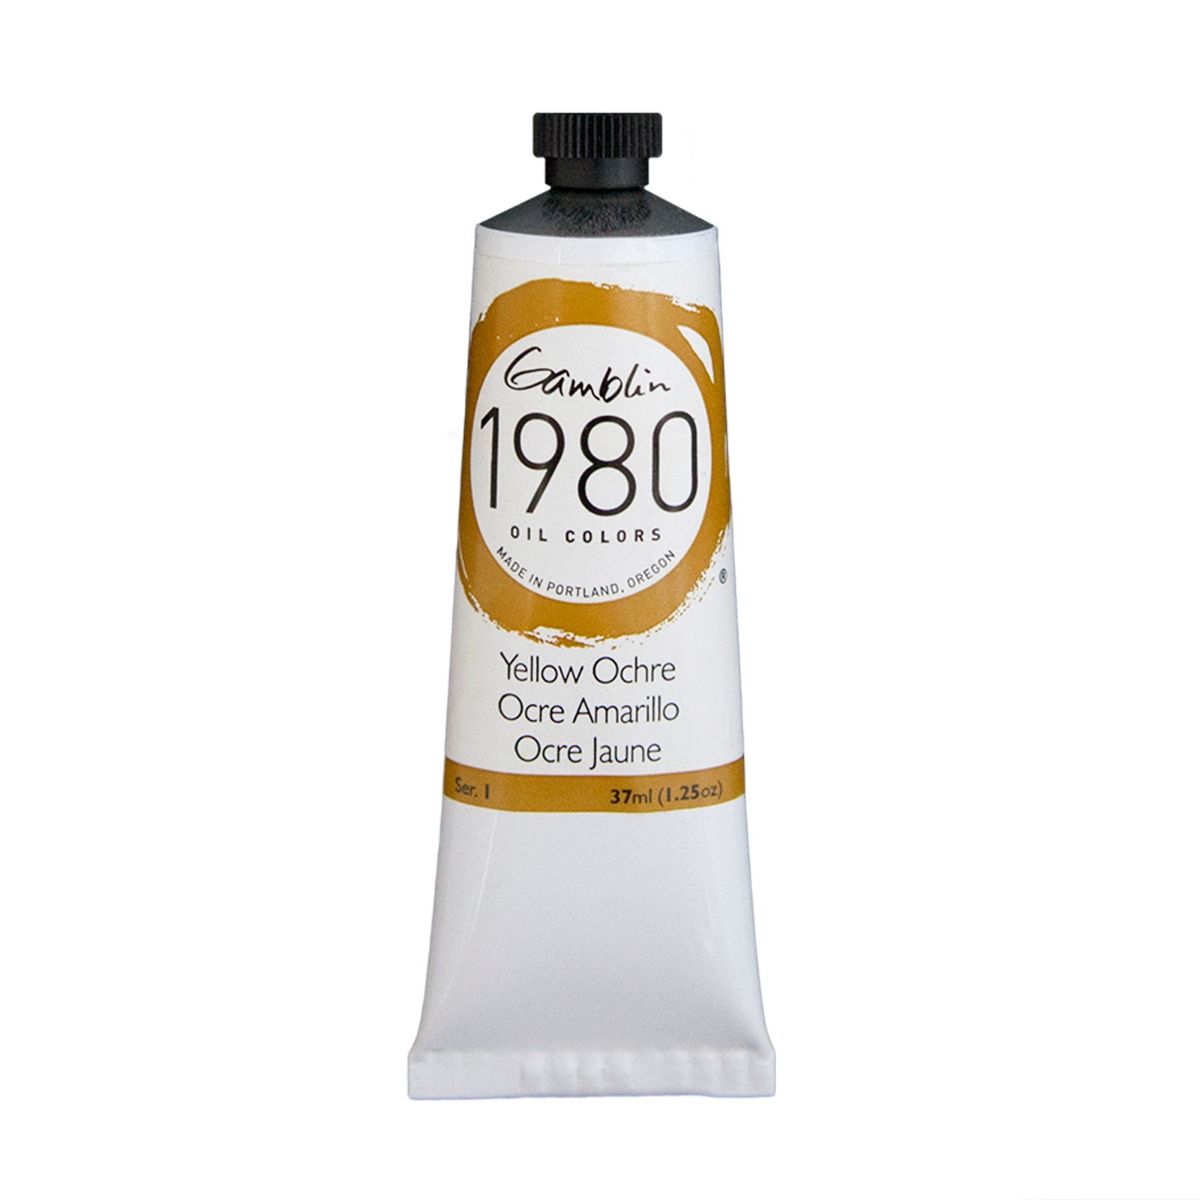 Gamblin 1980 Oils - Yellow Ochre, 37 ml (1.25oz)